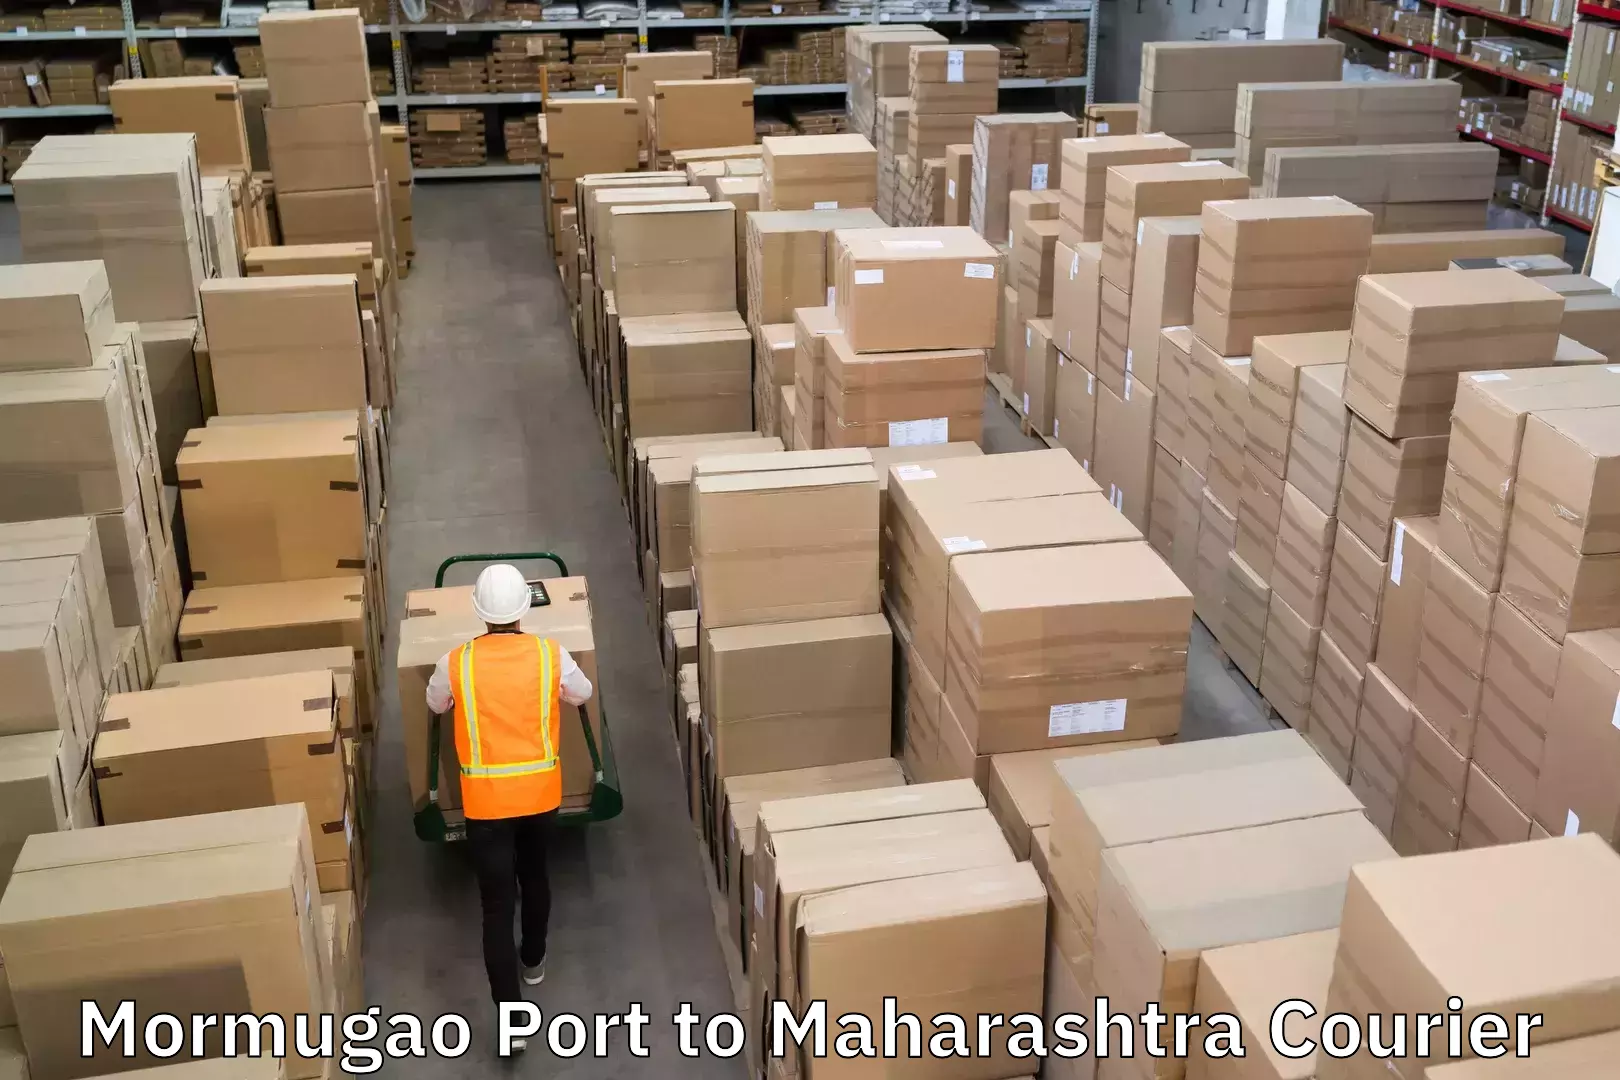 Reliable logistics providers Mormugao Port to Yeola